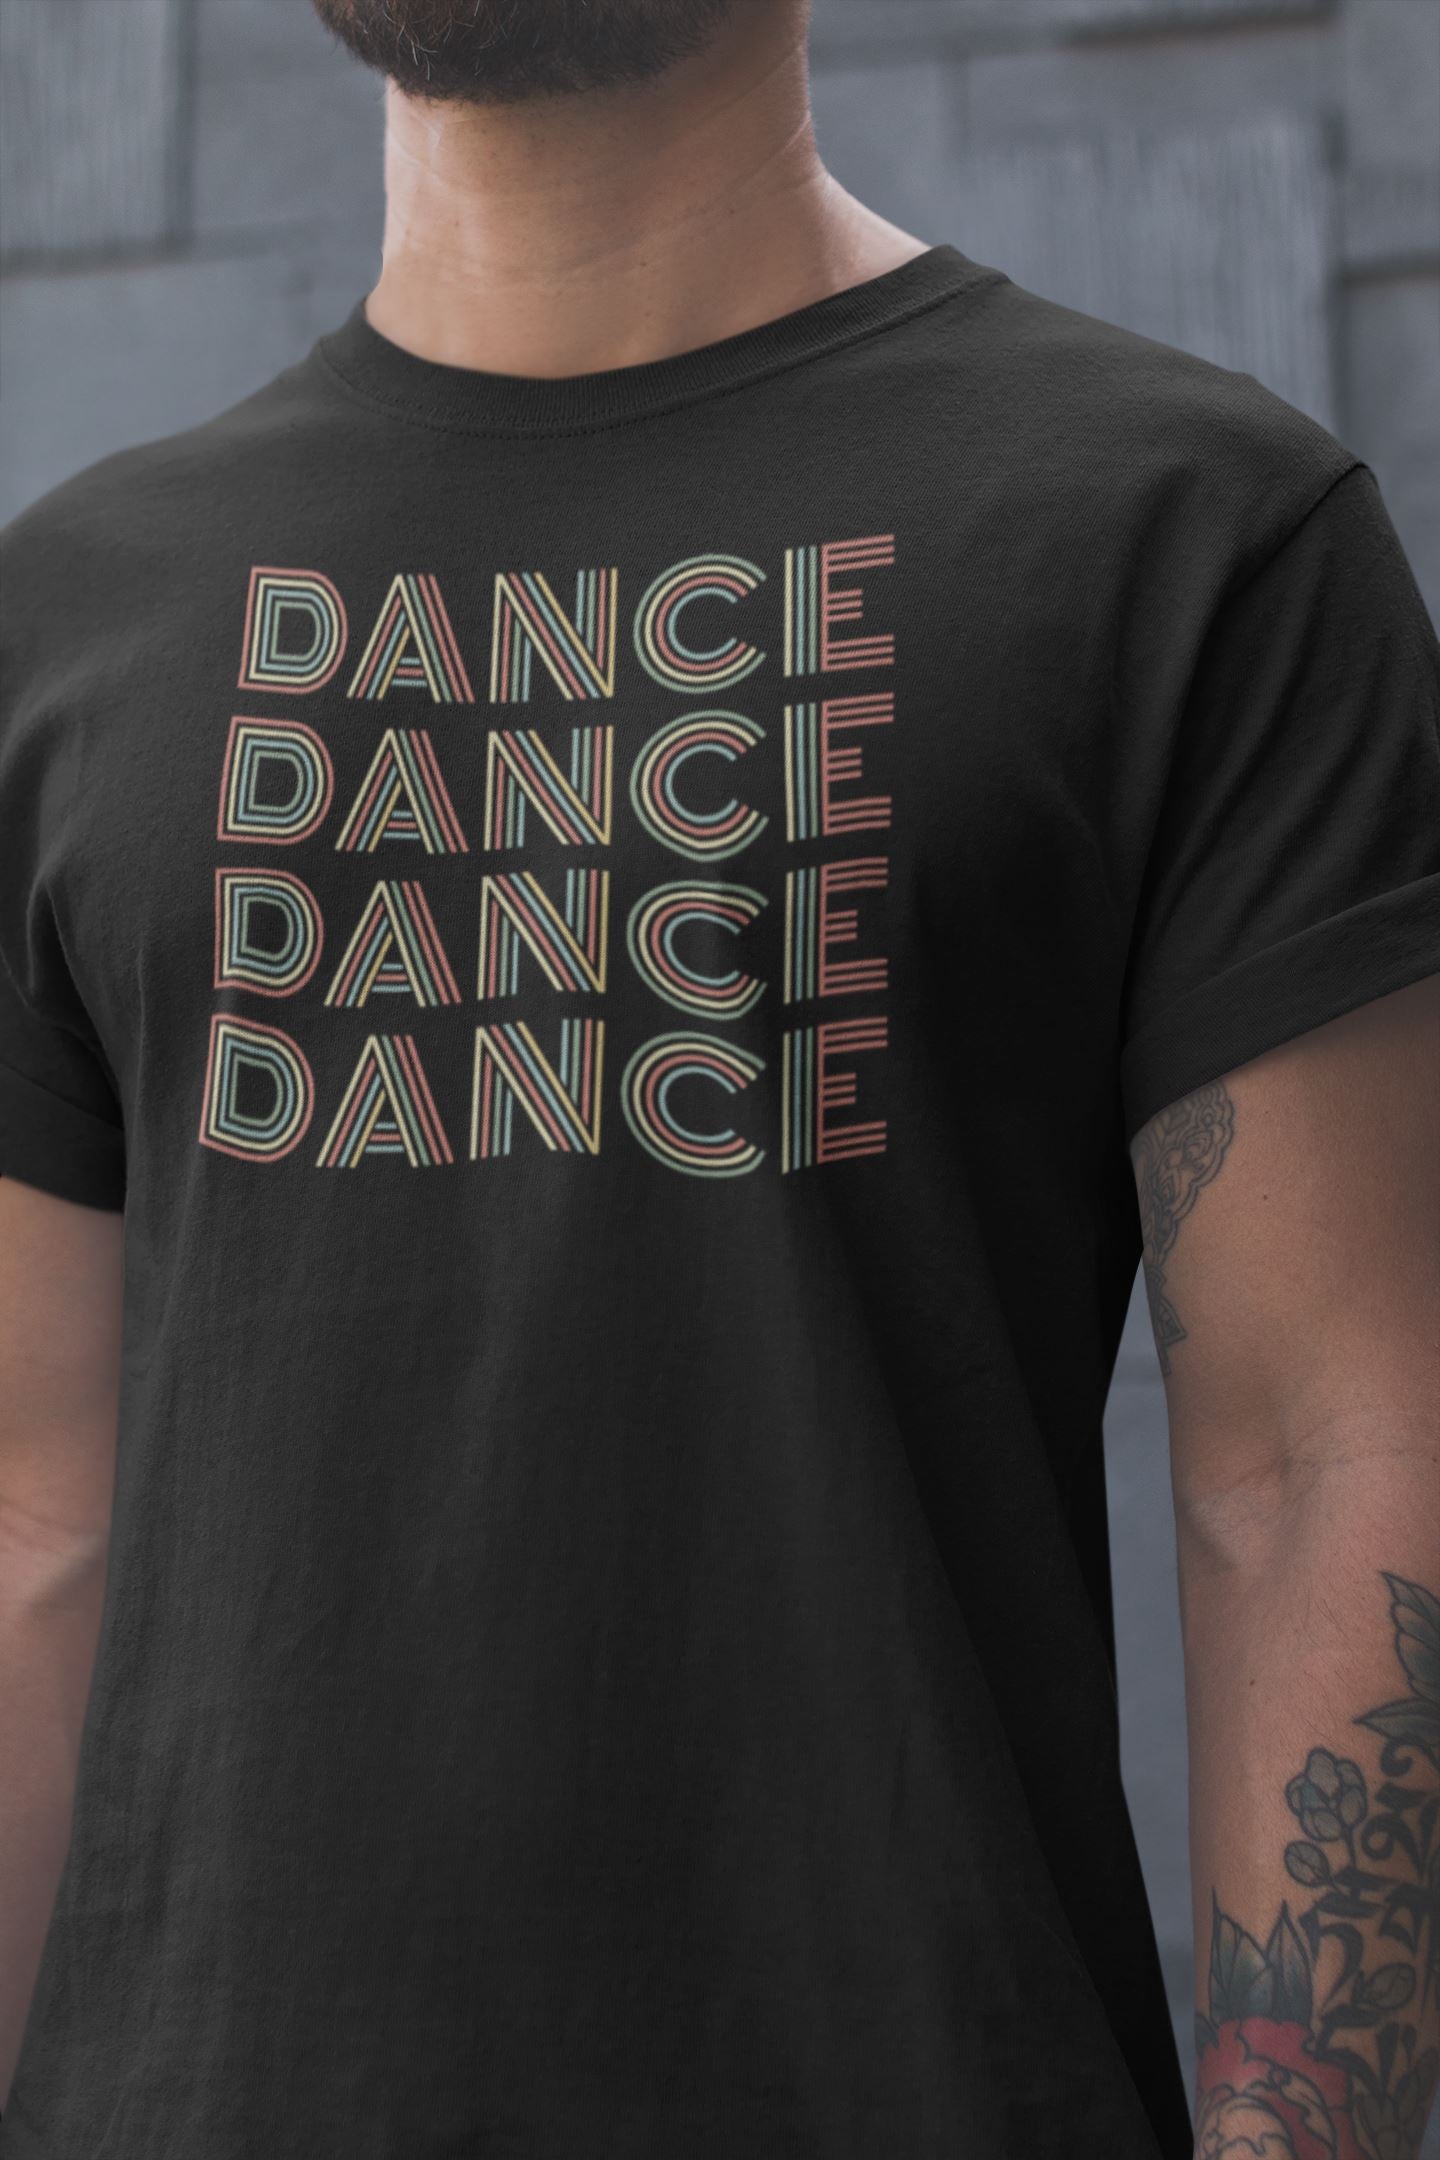 Dance Dance Dance Dance 3D Effect Exclusive Black T Shirt for Men and Women freeshipping - Catch My Drift India